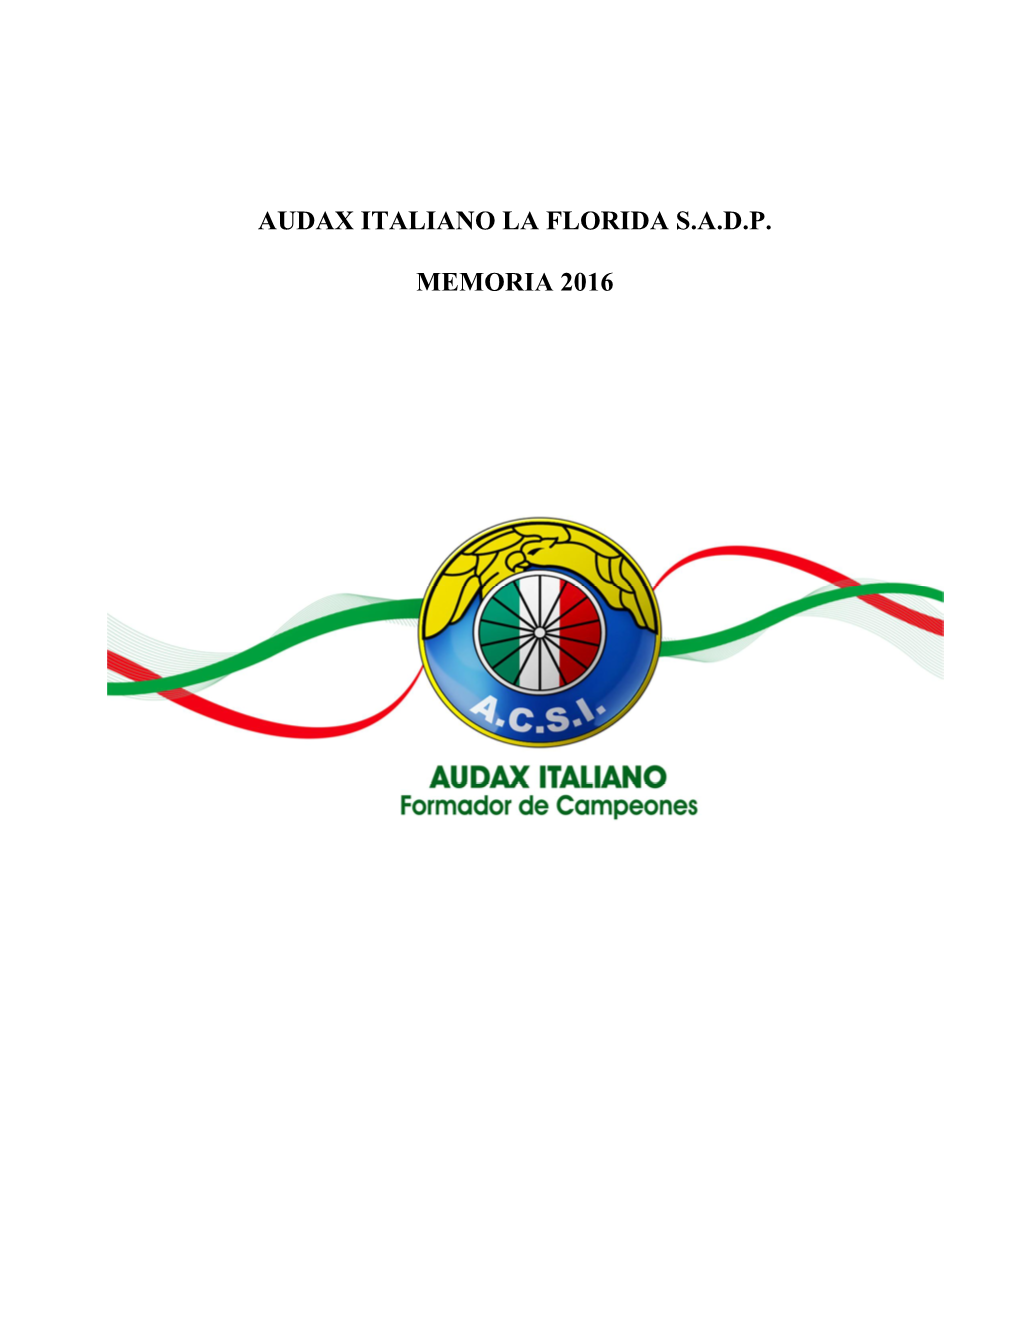 Audax Italiano La Florida S.A.D.P. Memoria 2016